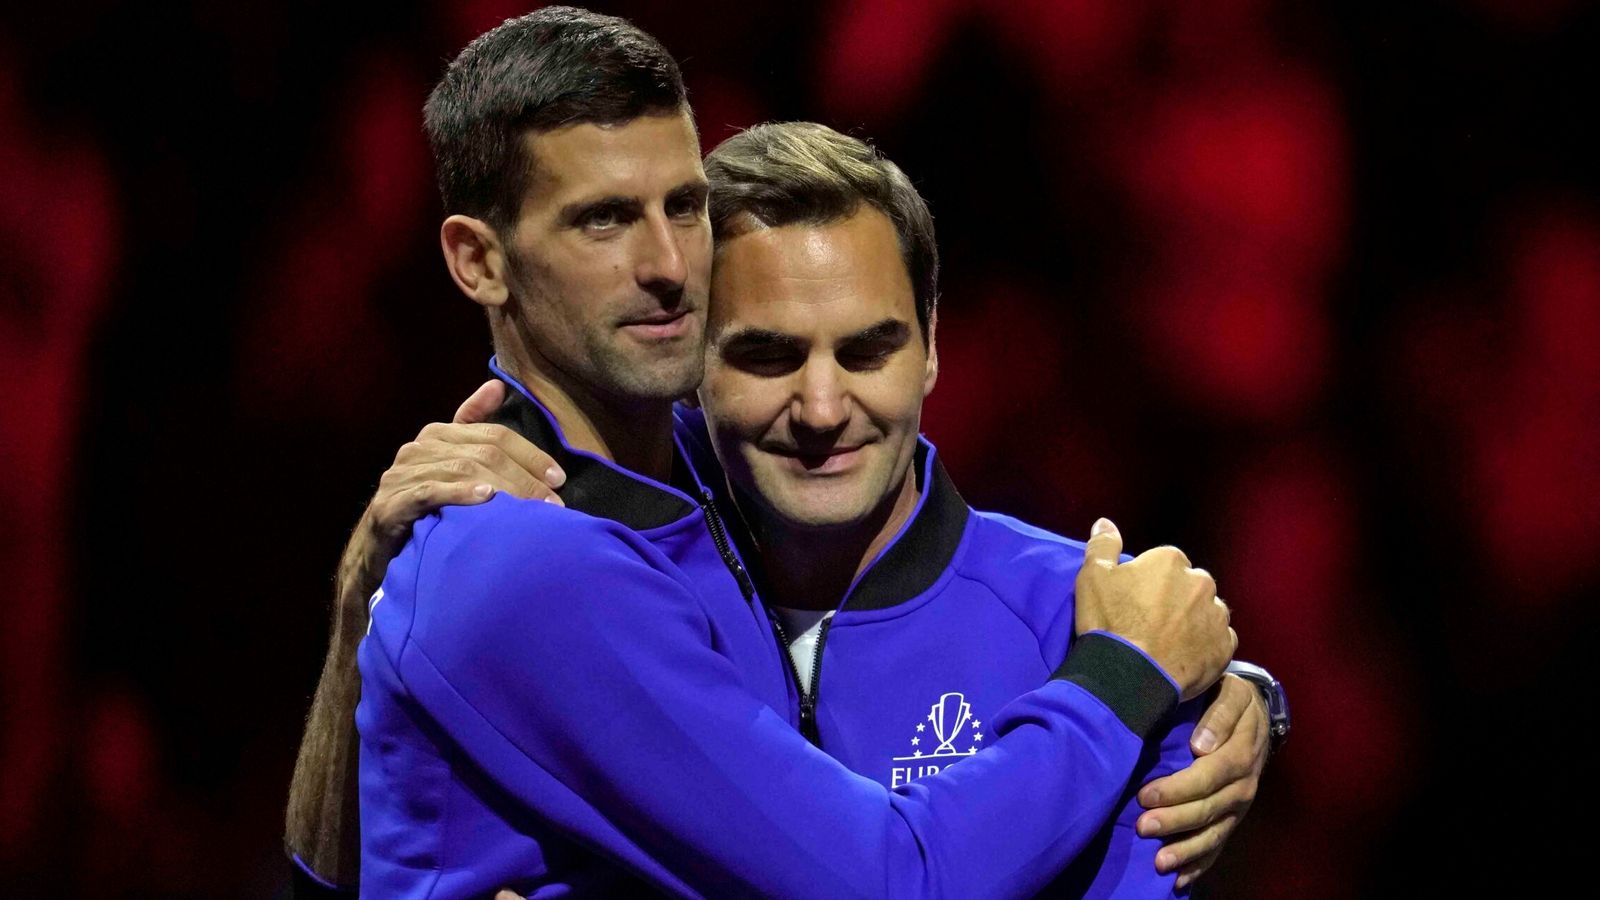 Novak Djokovic wants biggest rivals at his swansong similar to Roger Federer send-off